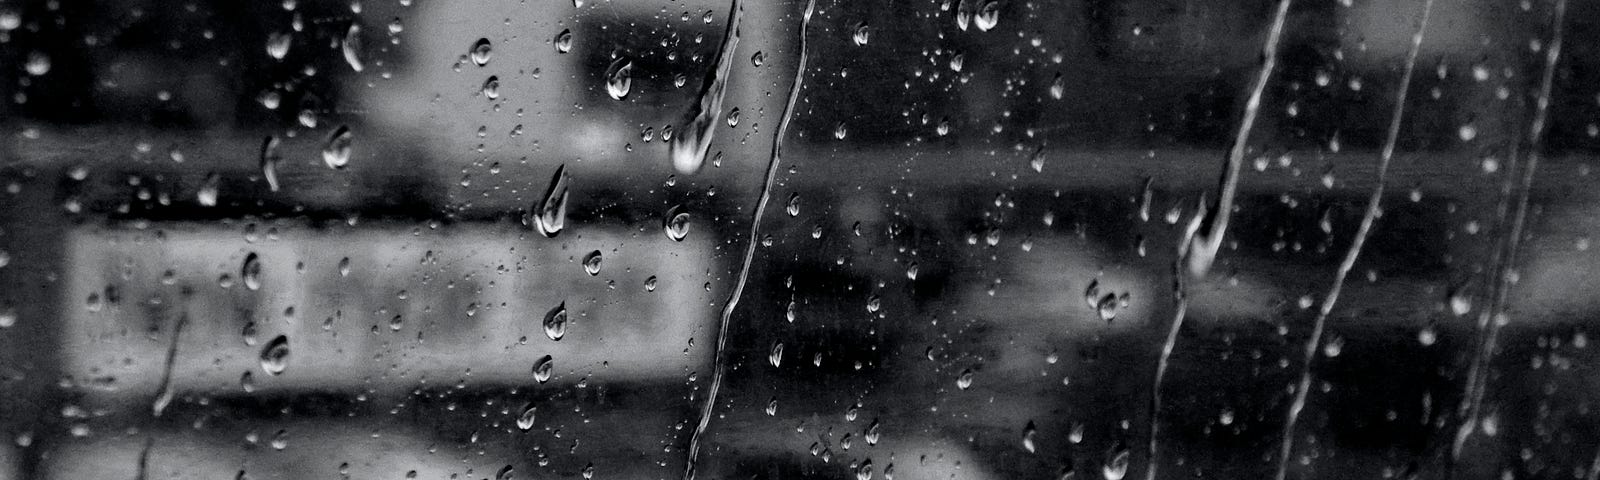 raindrops on a windowpane.